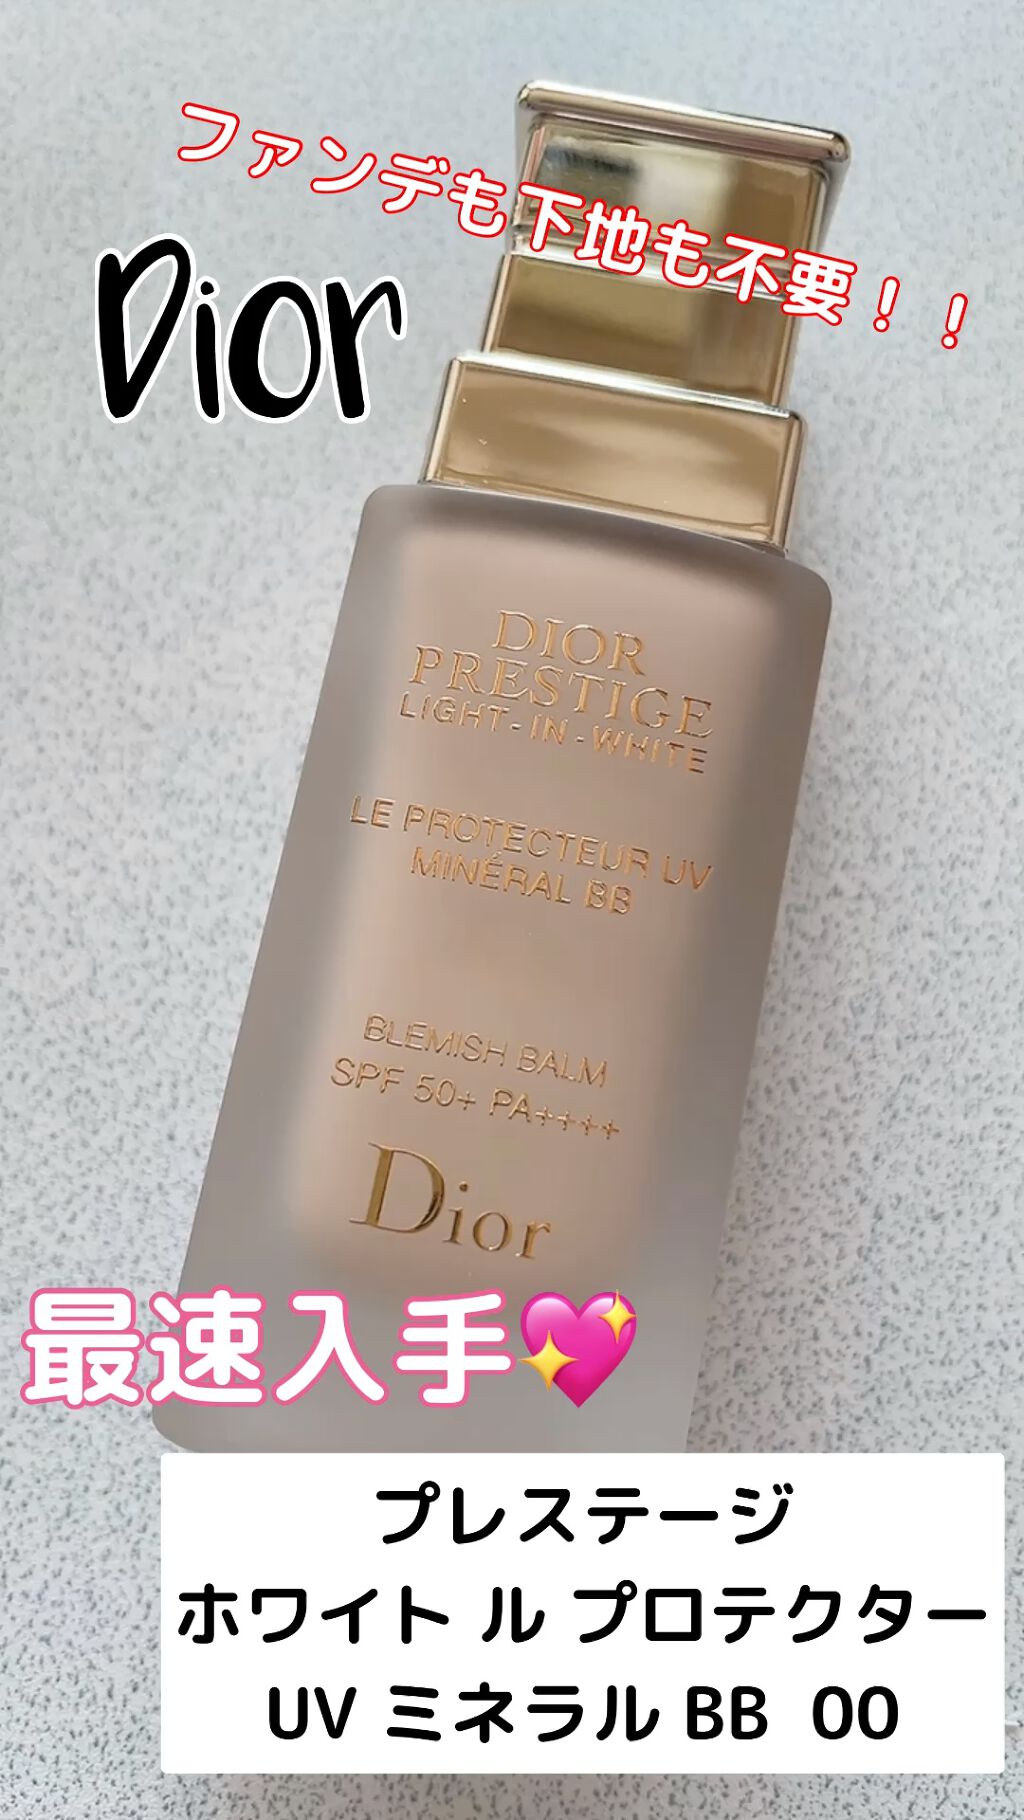 Dior prestige light in white BB 01番LEP - ファンデーション